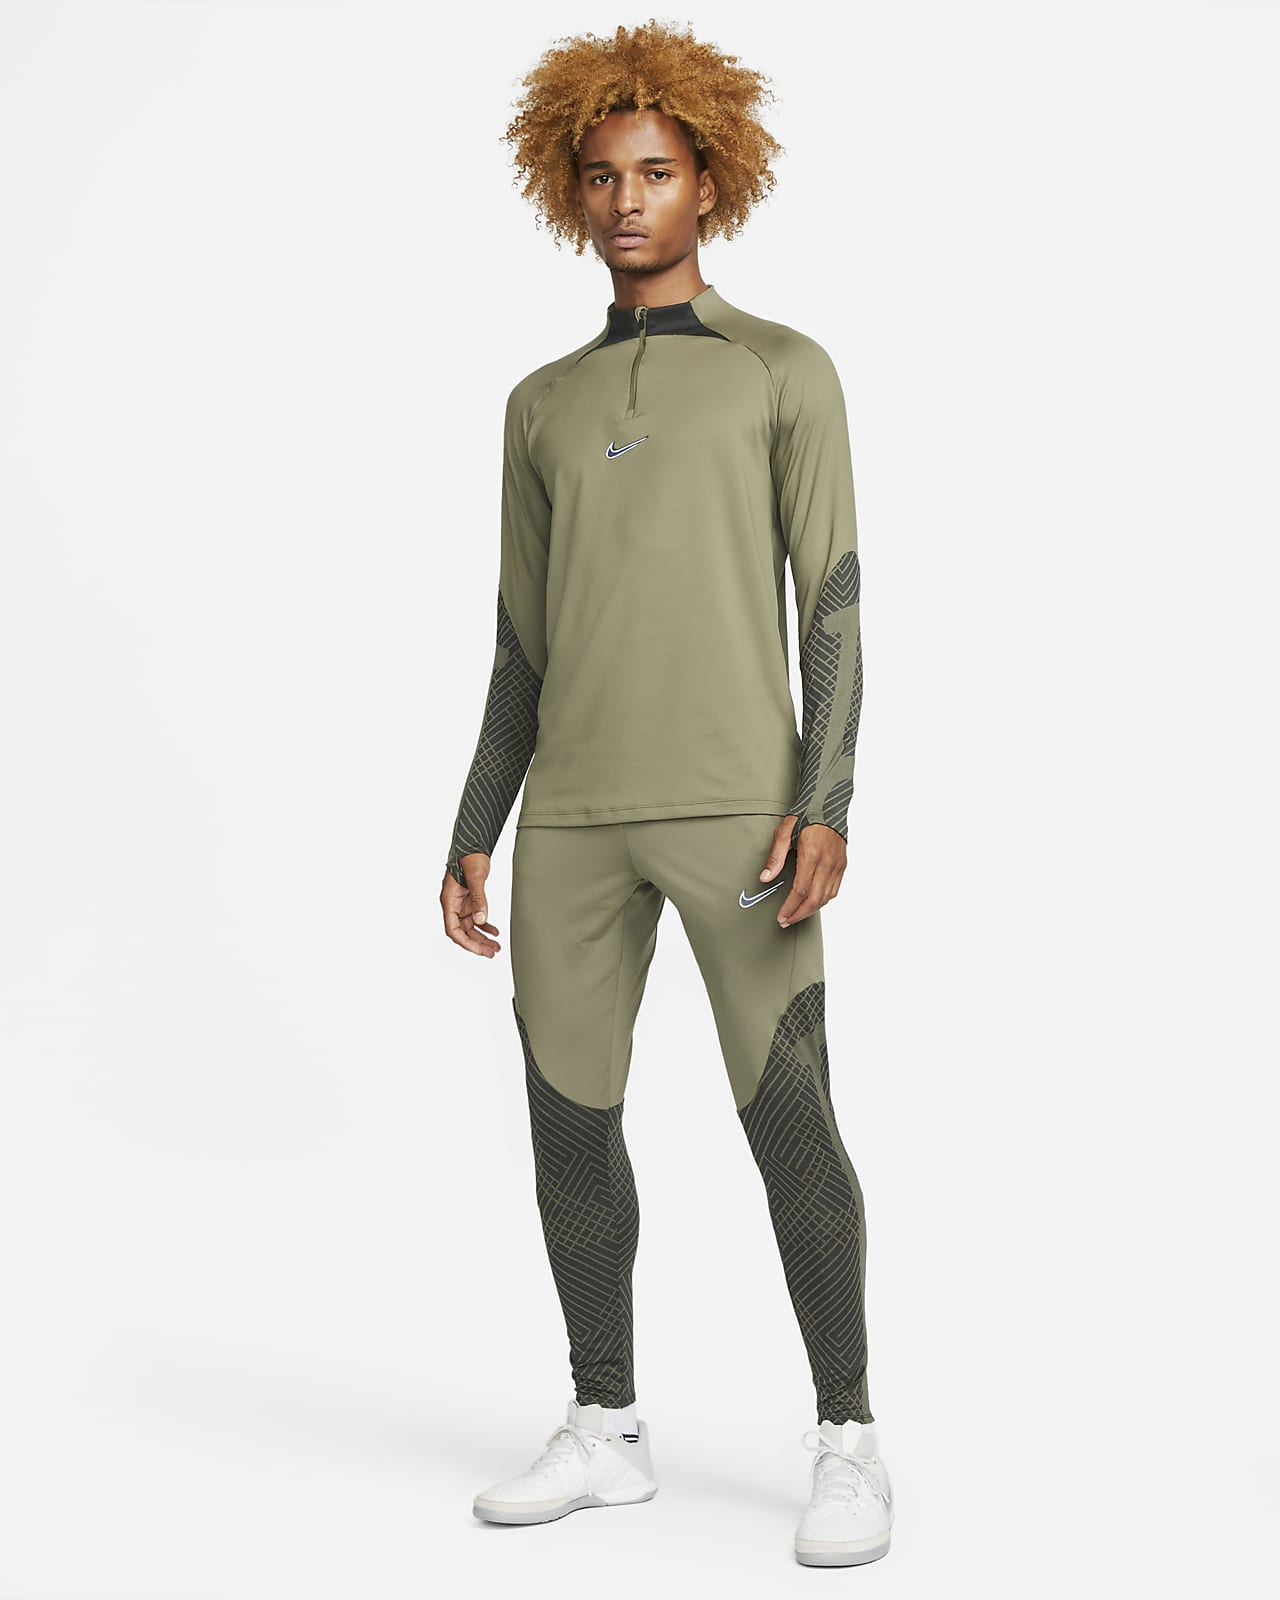 Nike Soccer Pants at Soccer Pro